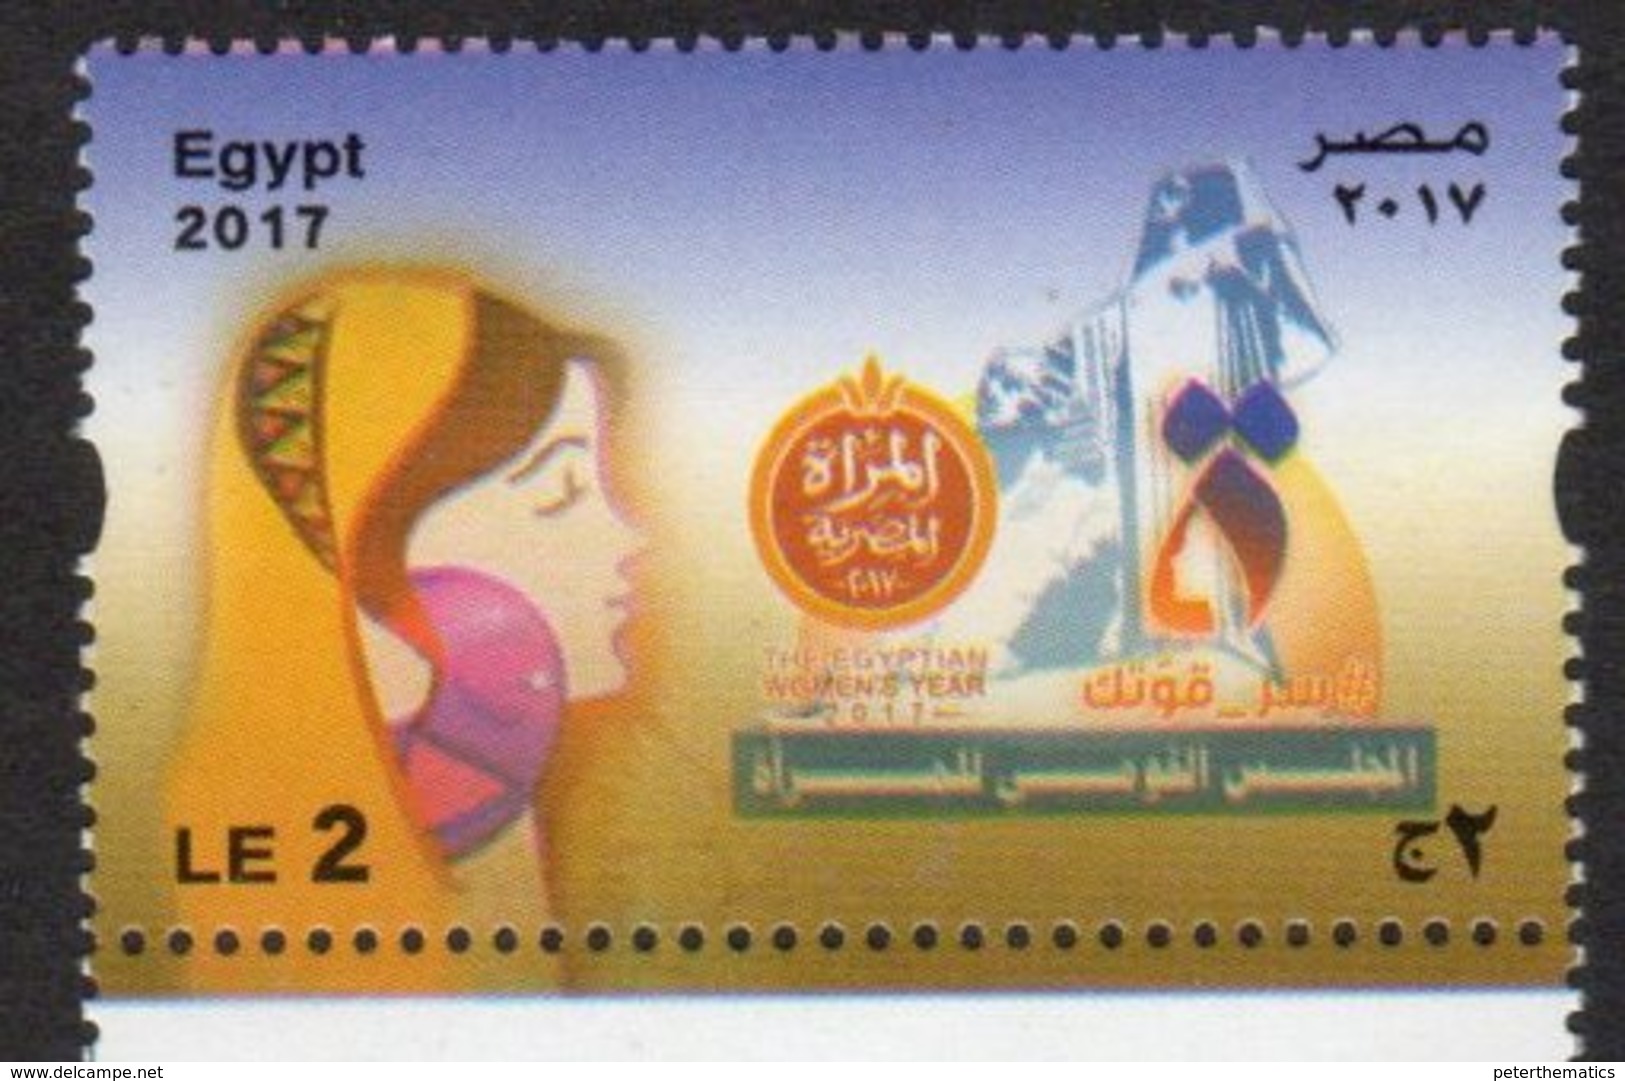 EGYPT , 2017, MNH, WOMEN, EGYPTIAN WOMEN YEAR,  1v - Unclassified